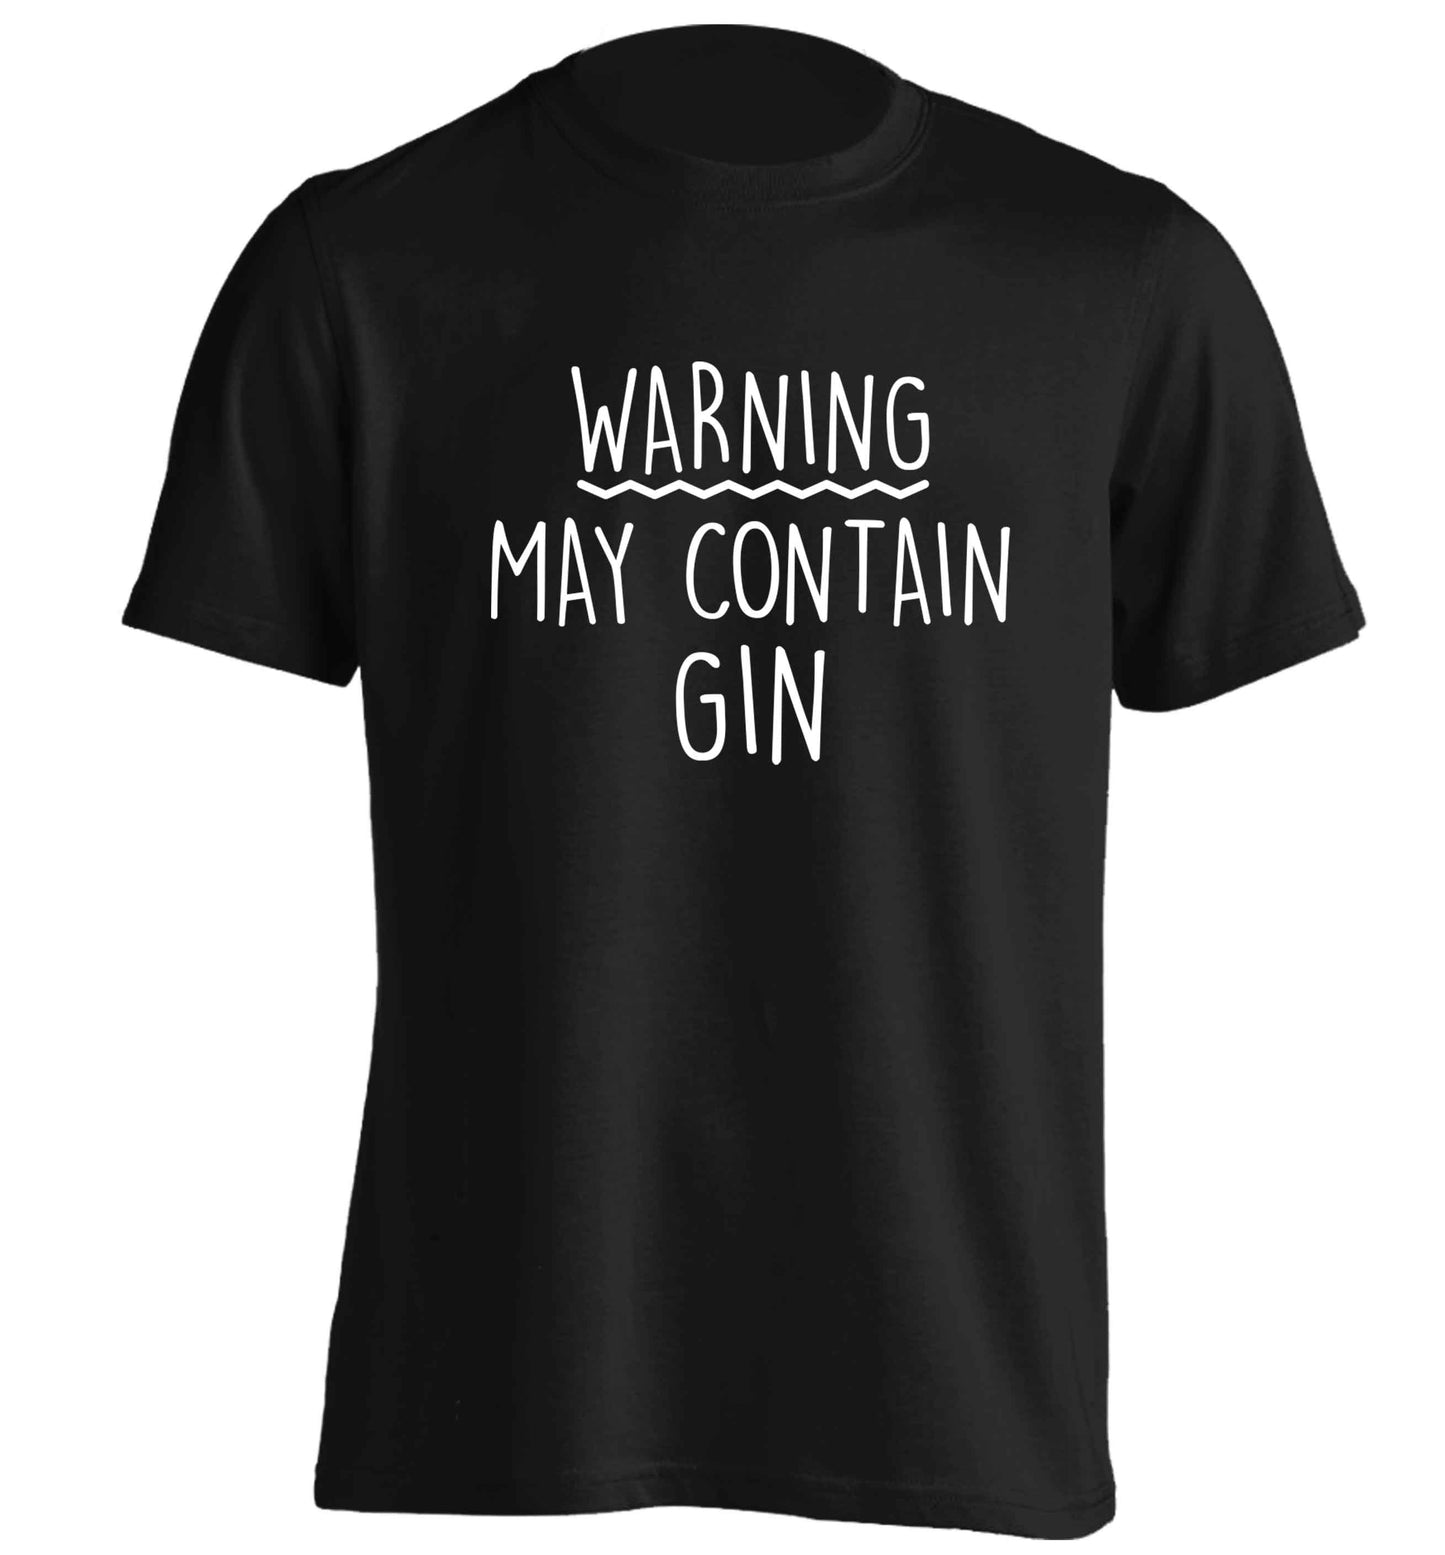 Warning may contain gin adults unisex black Tshirt 2XL